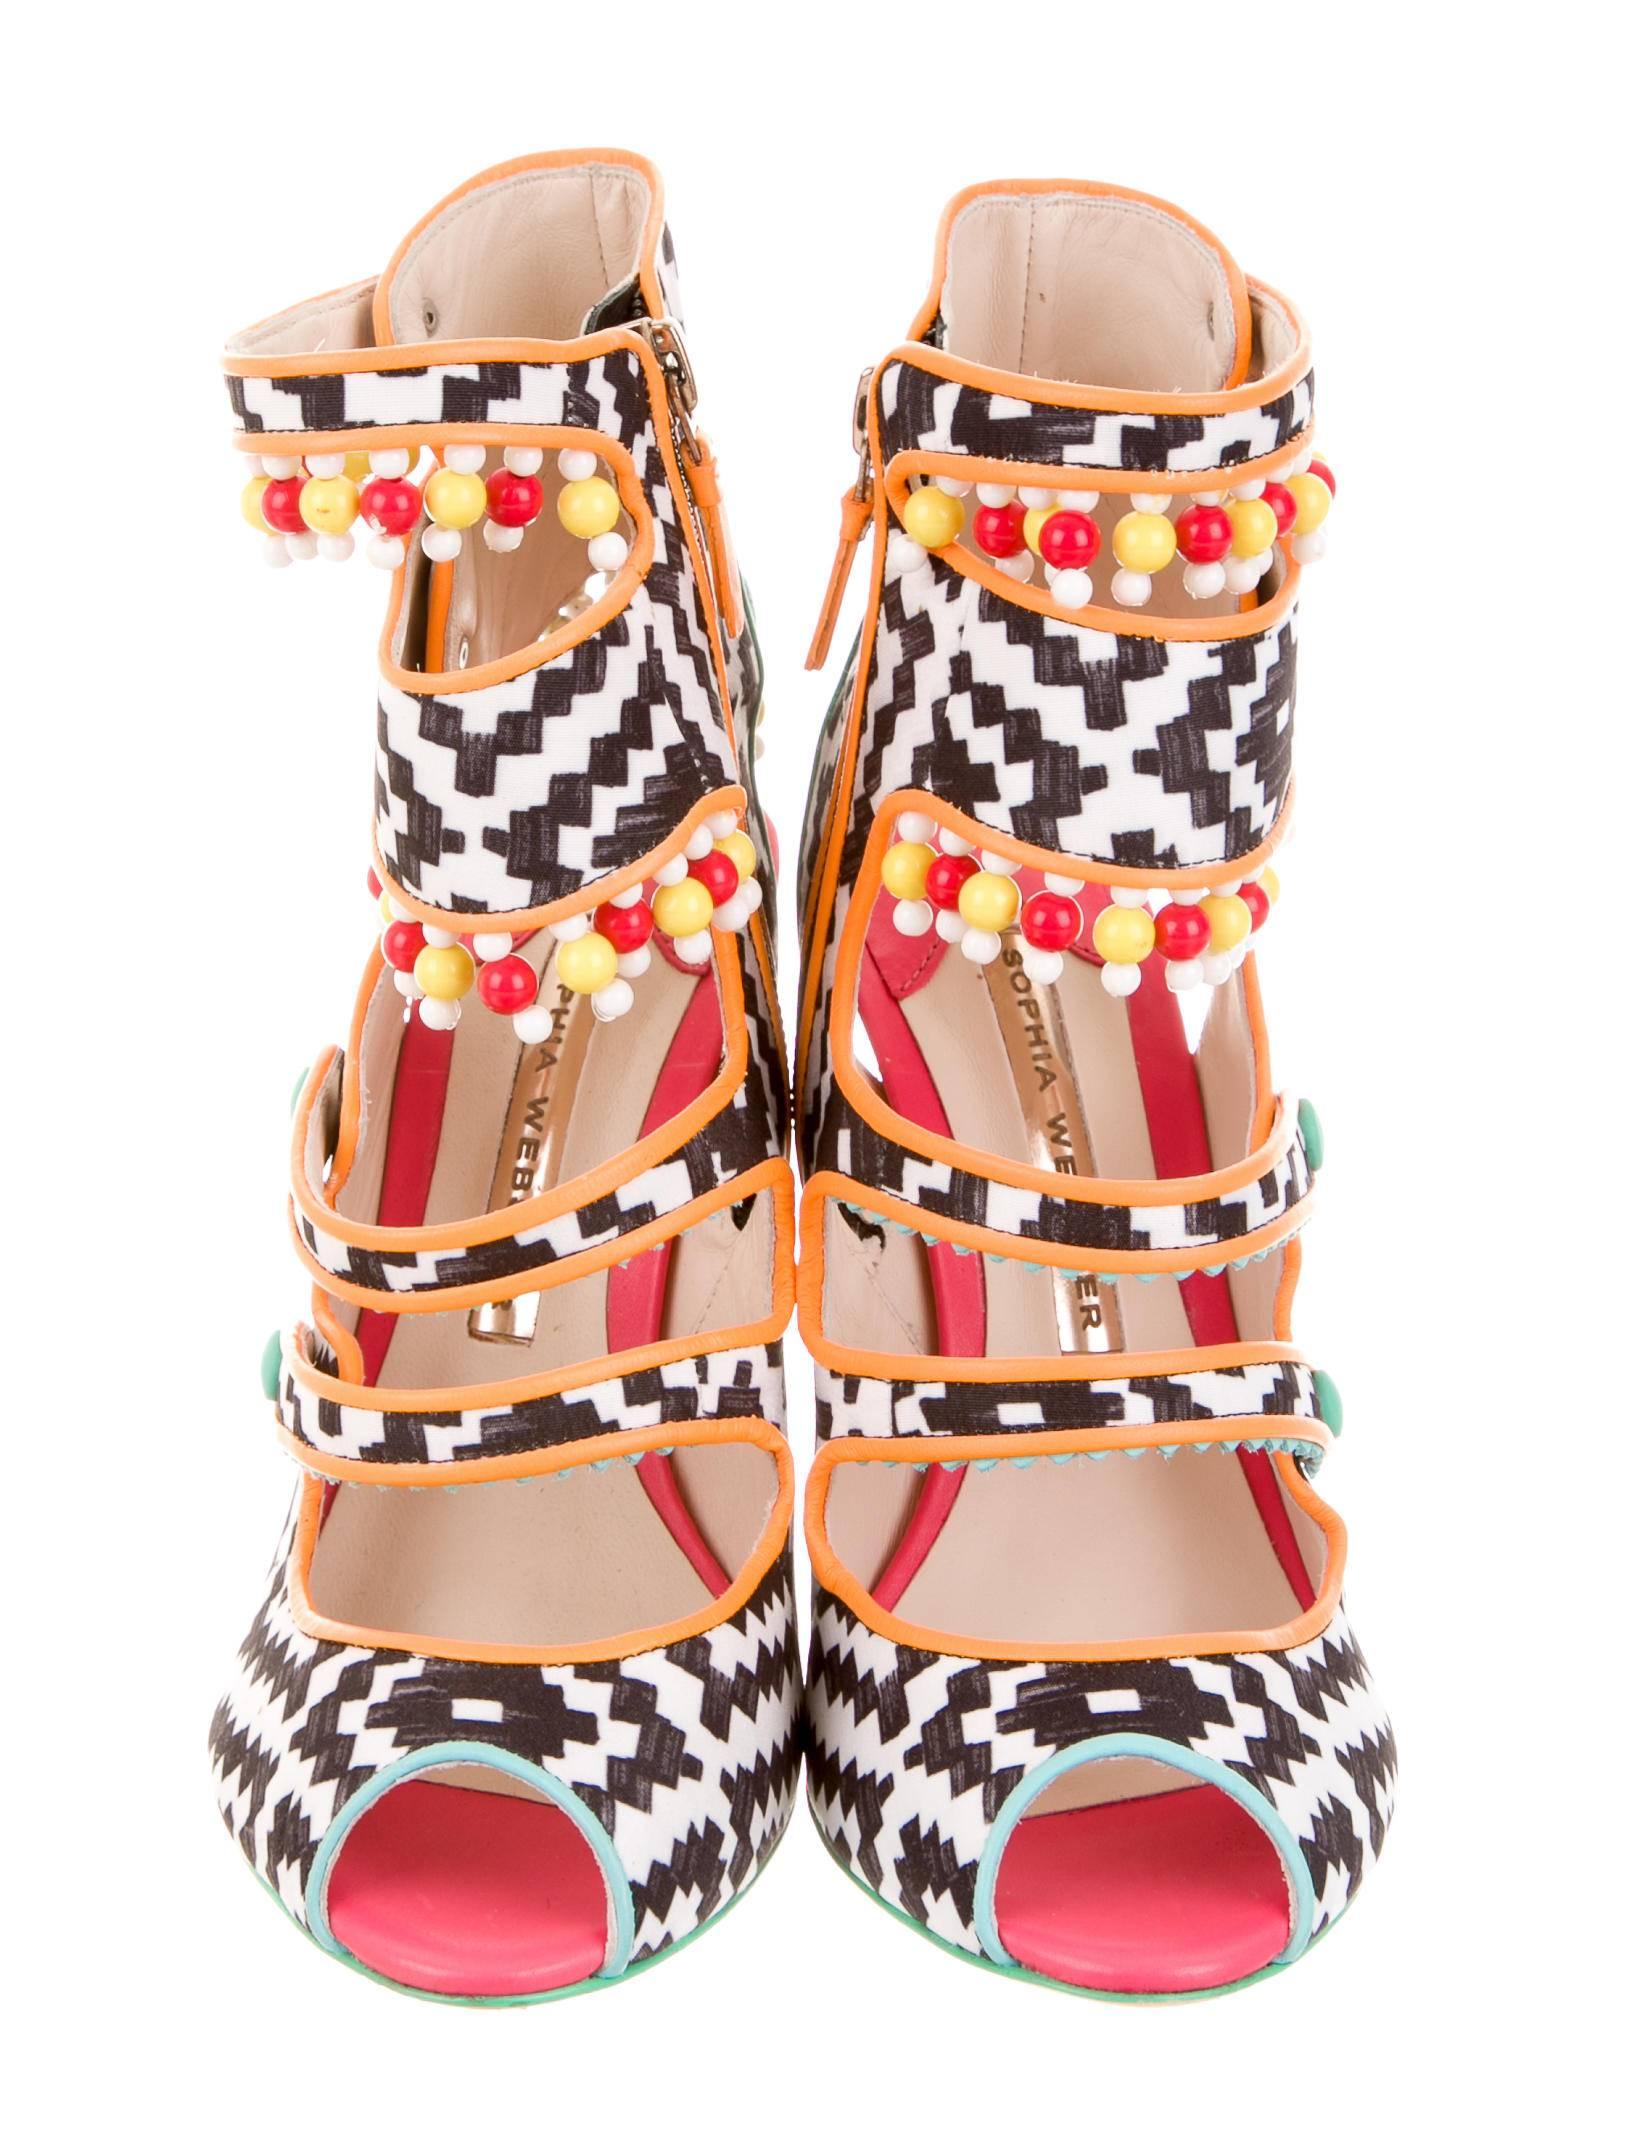 Beige Sophia Webster NEW Multi Color Beaded High Heels Sandals in Box